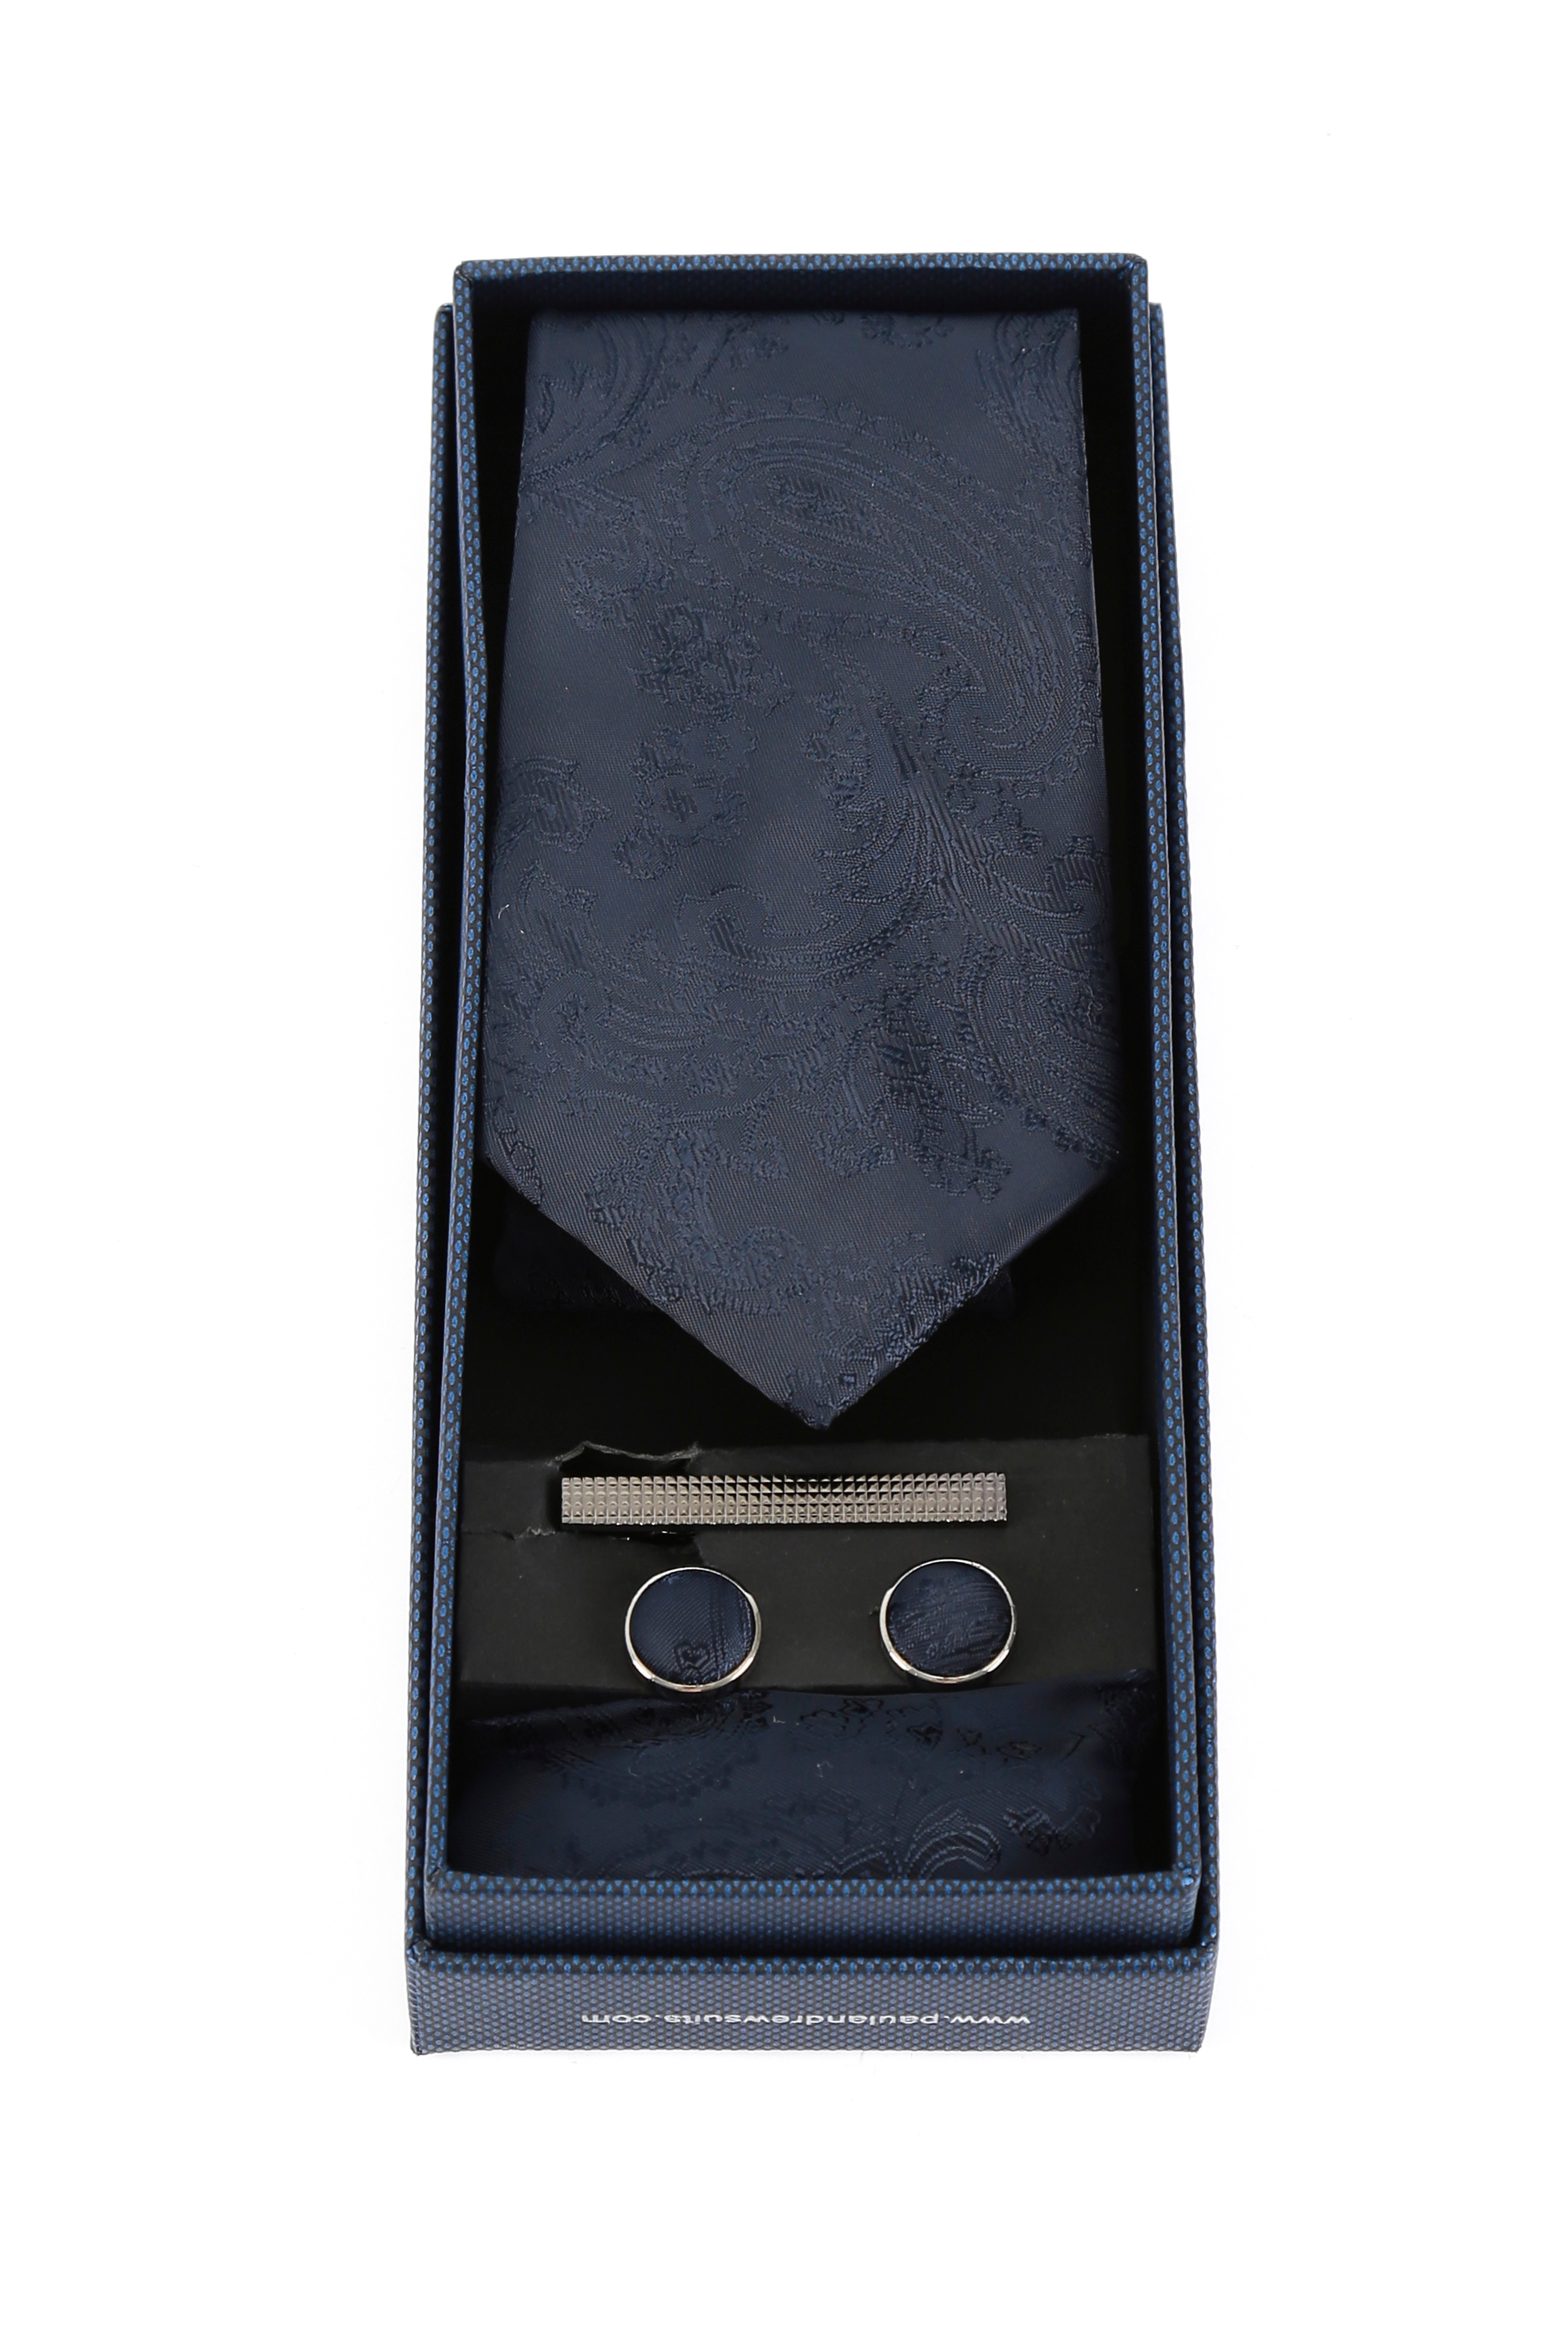 Men's Paisley Tie Cufflink Set - Navy Blue